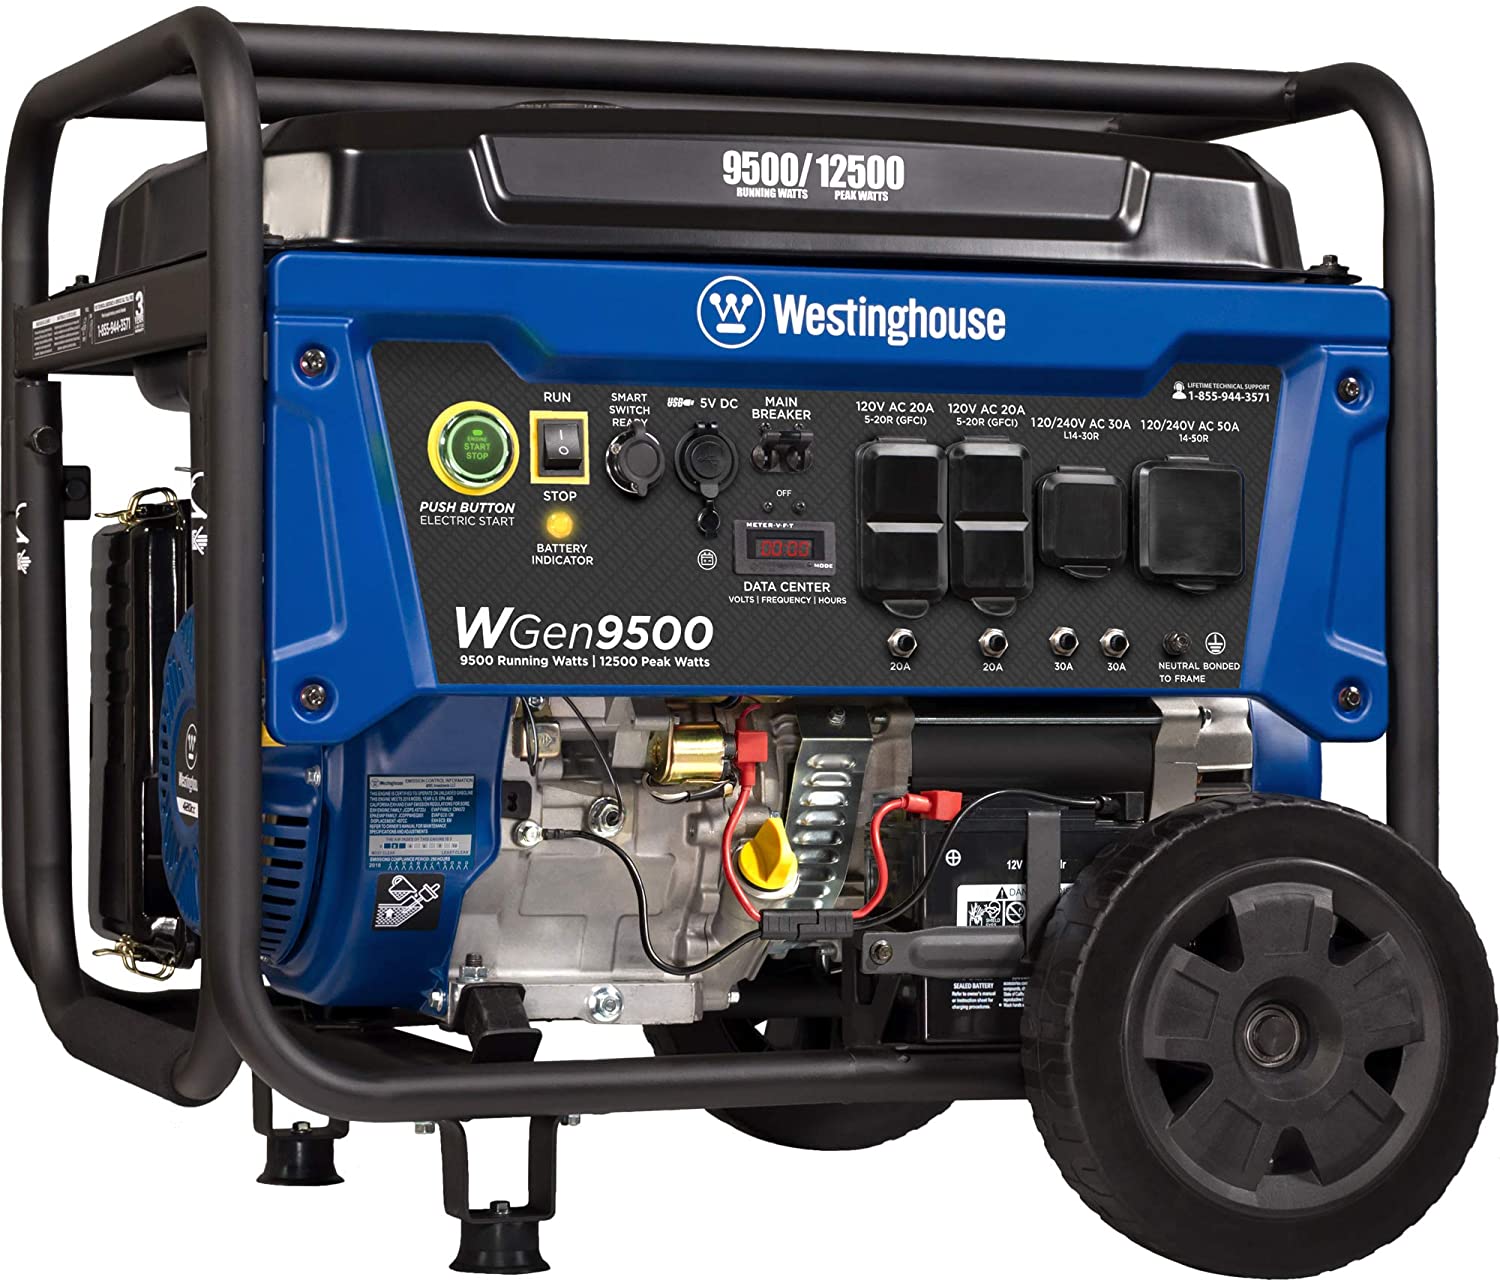 Westinghouse Outdoor Power Equipment WGen9500 Portable Generator